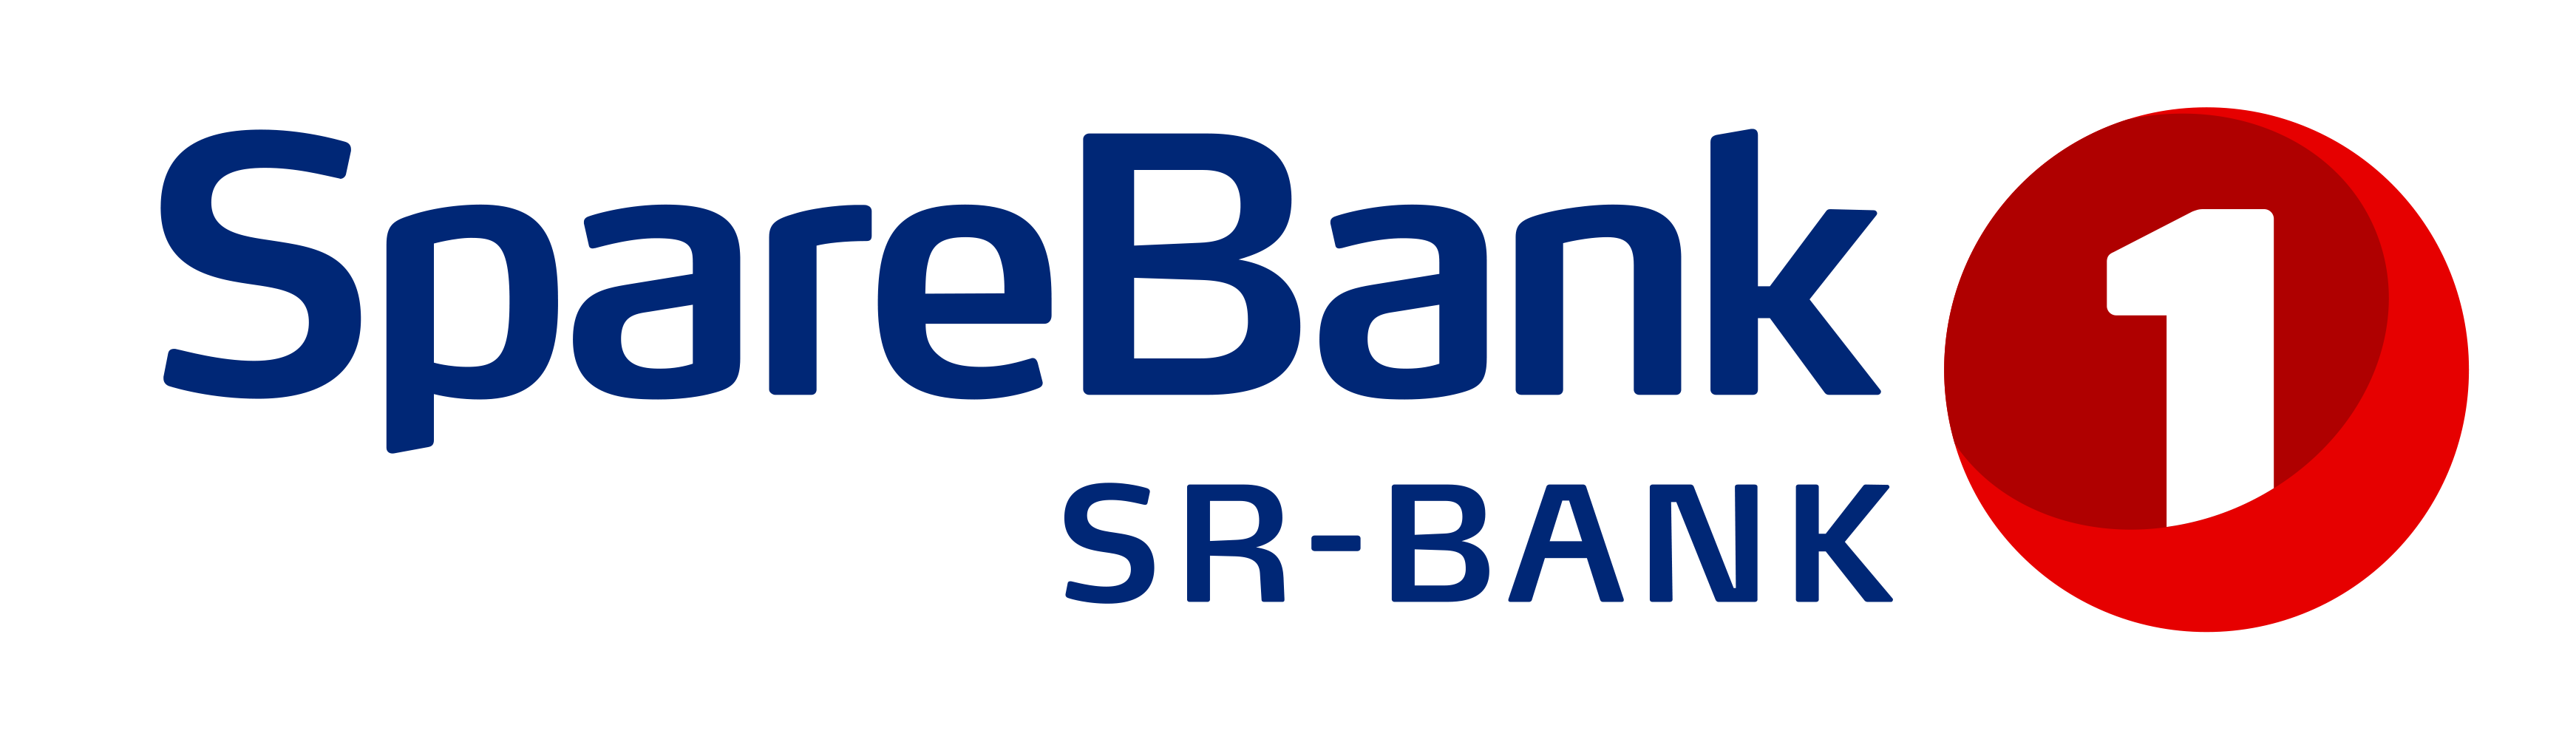 Sparebank1 SR-bank